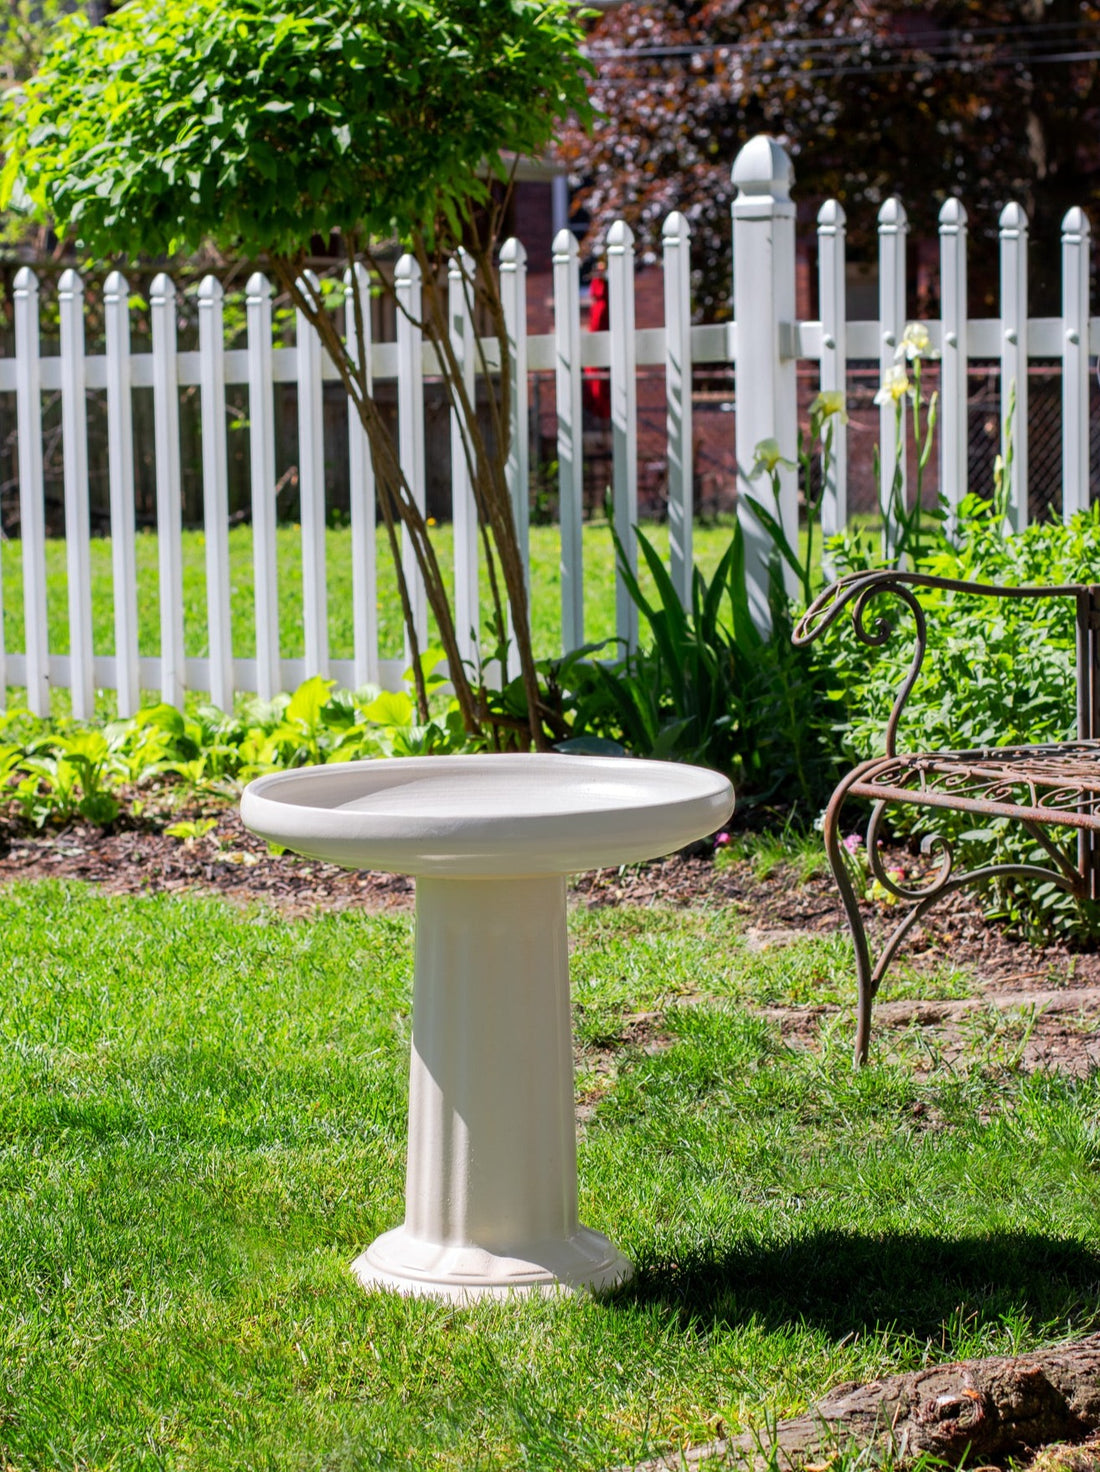 ceramic white birdbath with column design in a landscaped garden setting